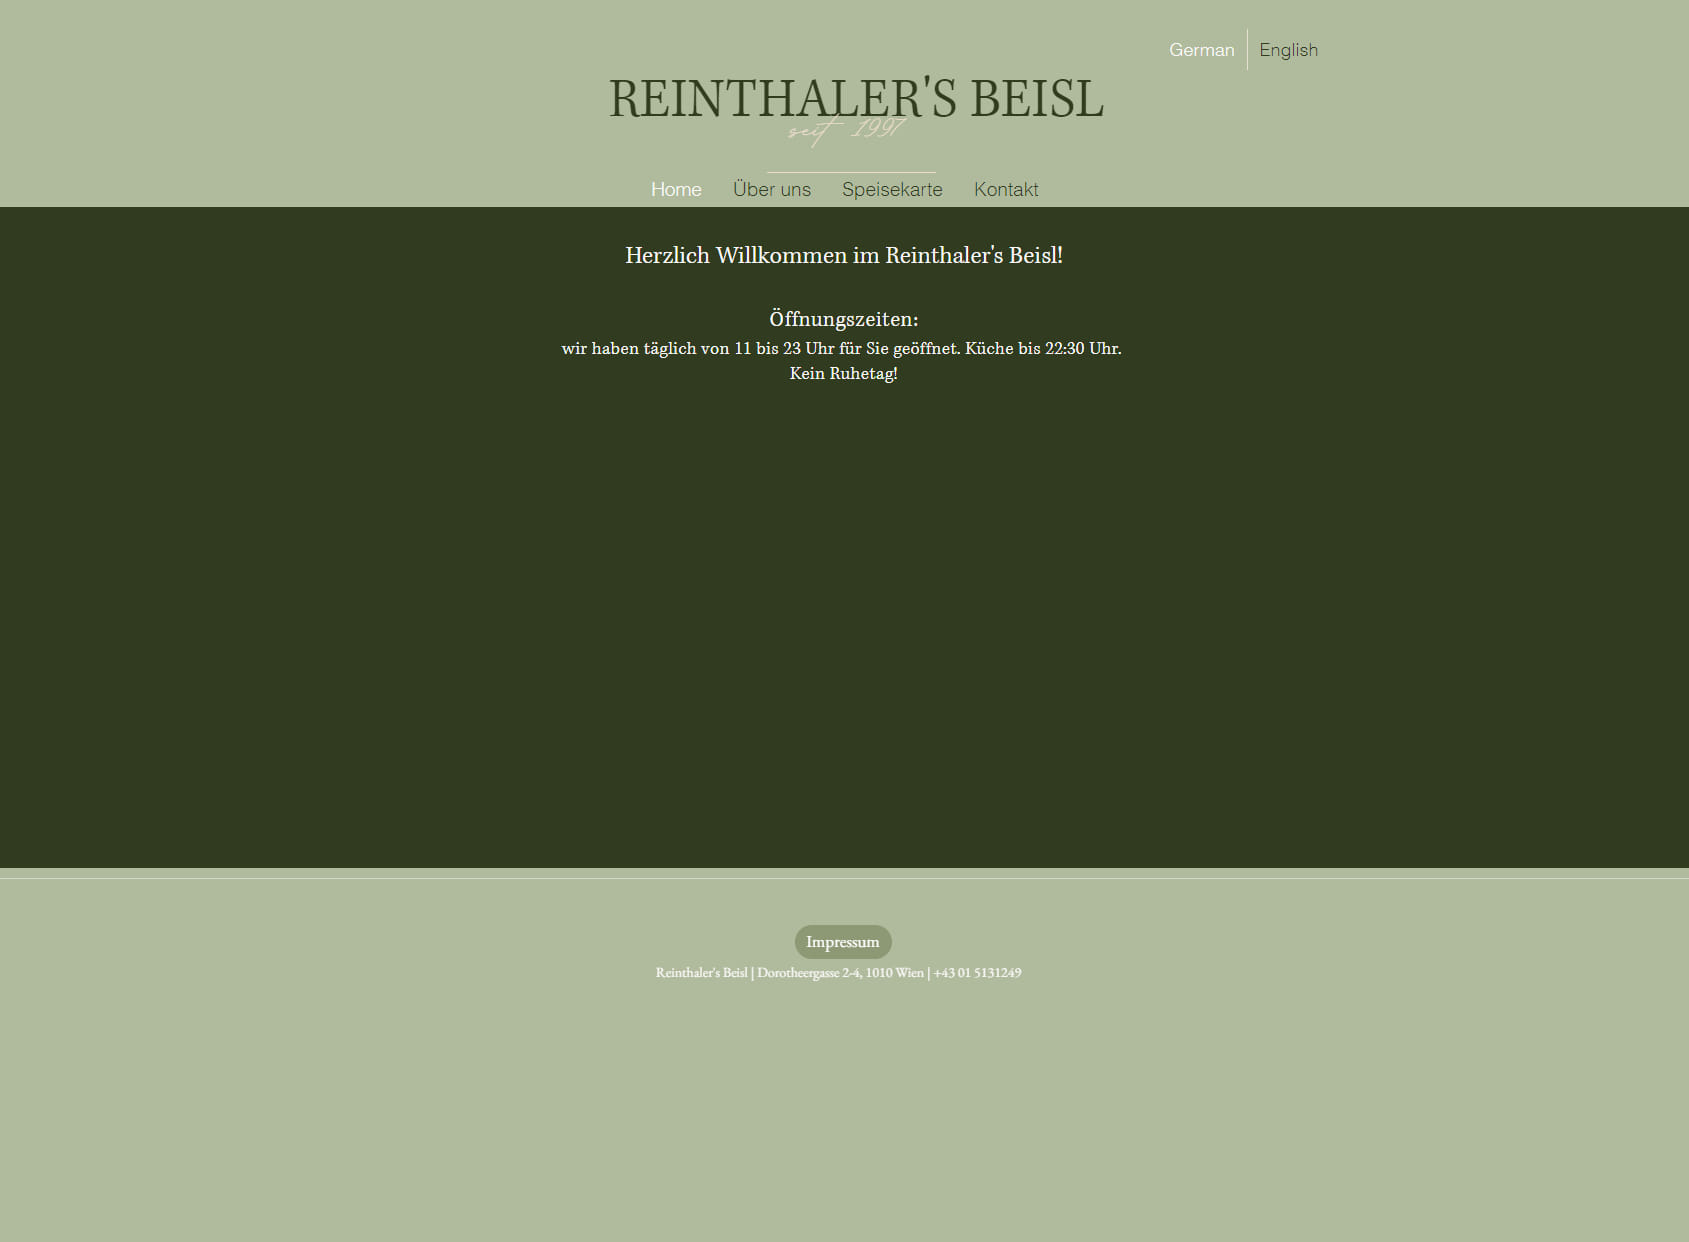 Reinthaler's Beisl